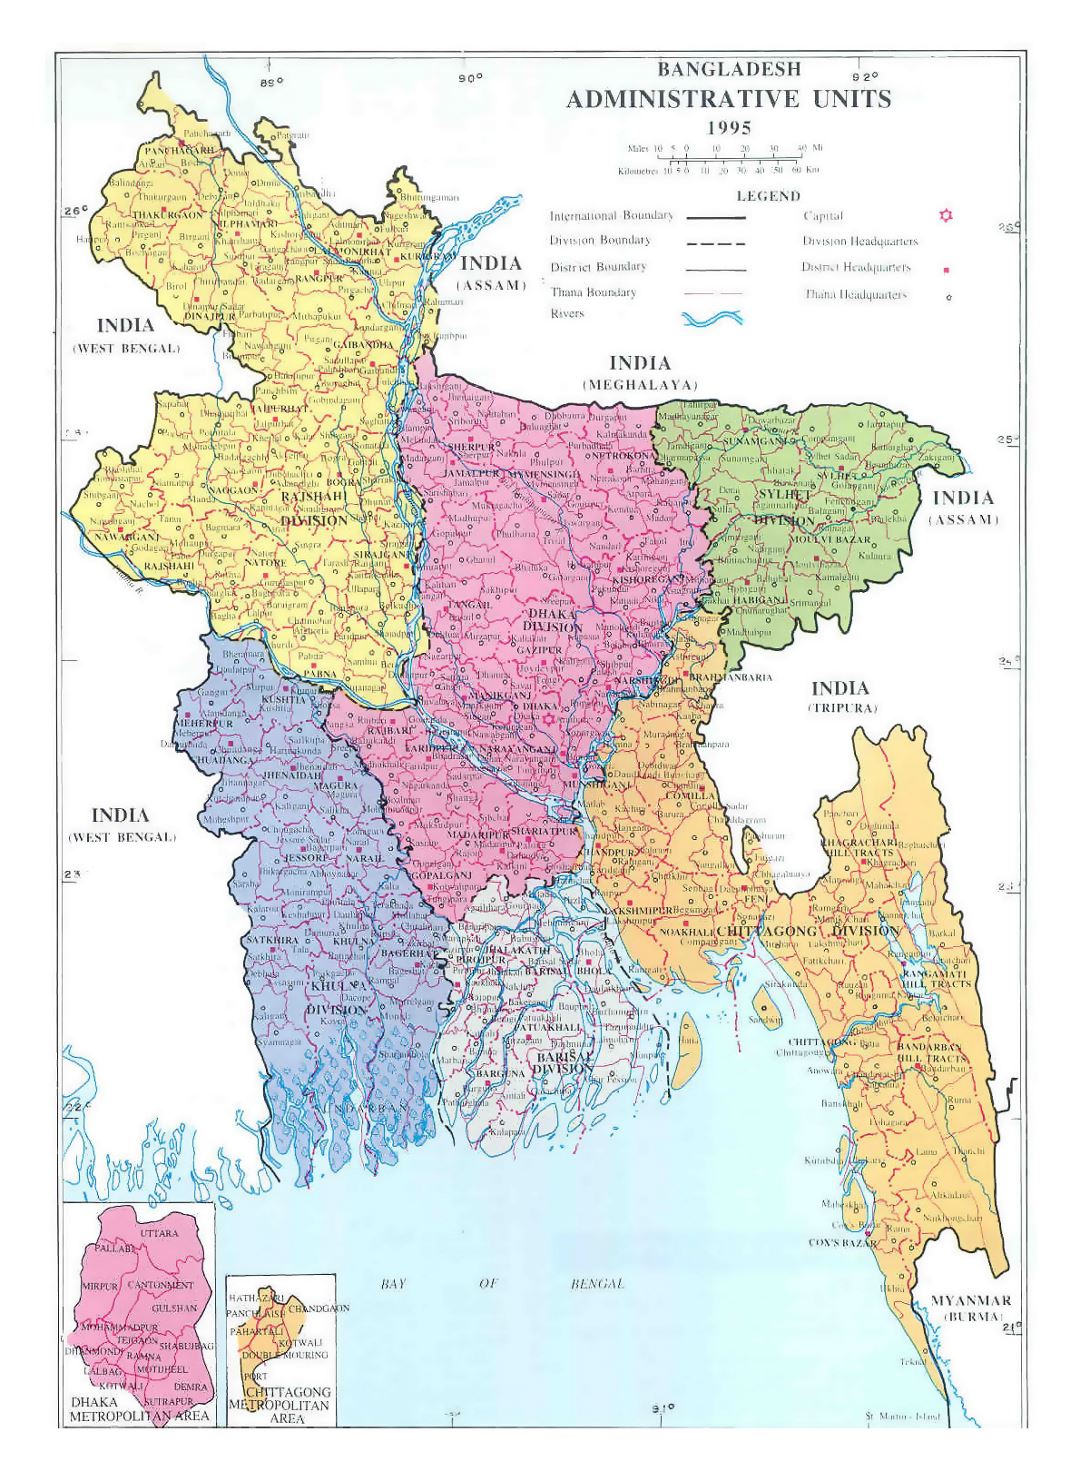 Detailed administrative map of Bangladesh